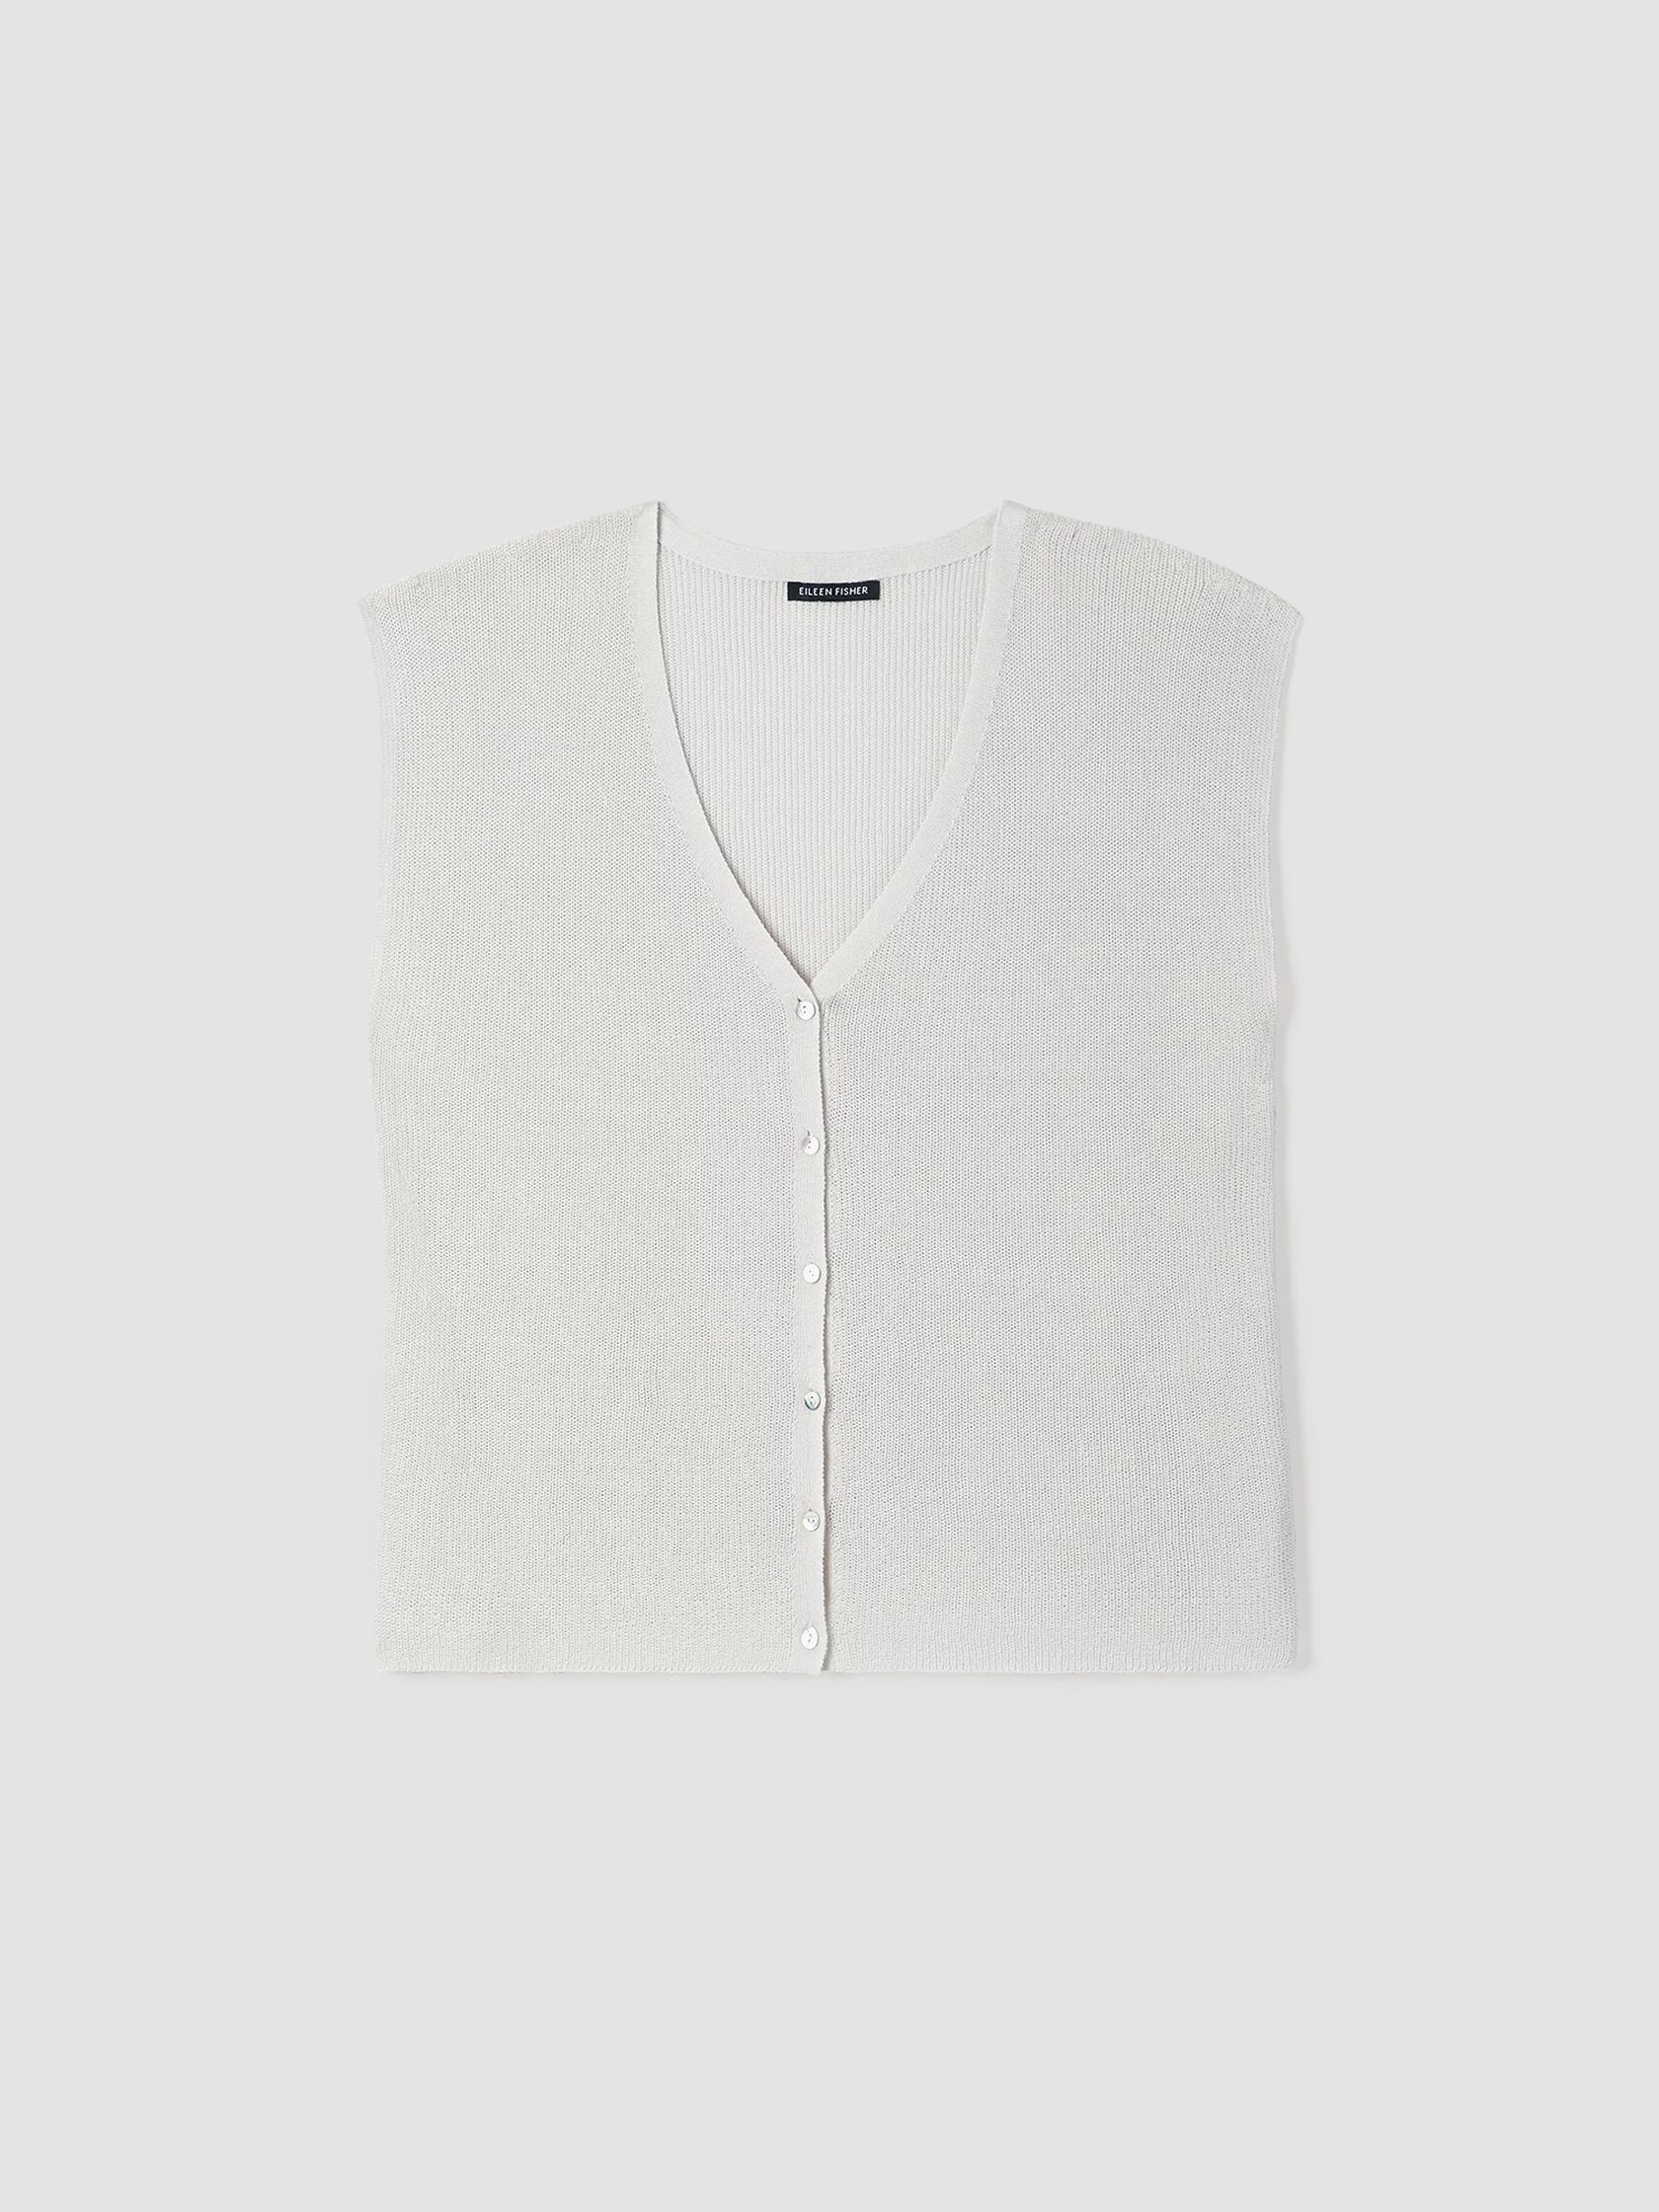 Peruvian Organic Cotton Crepe Vest